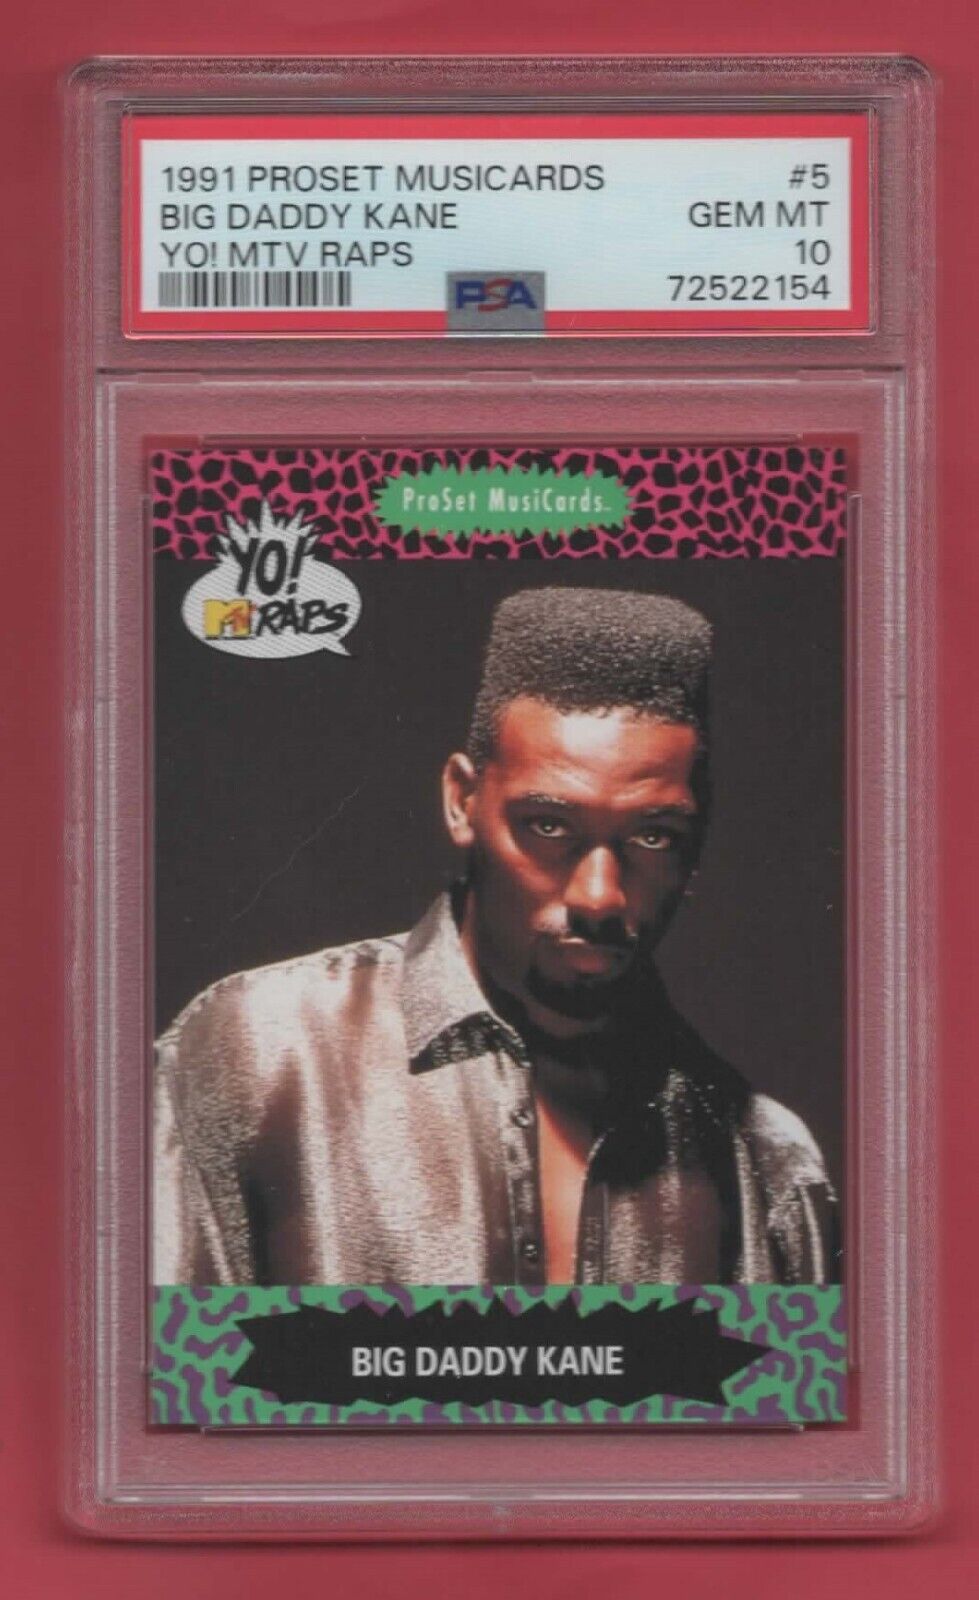 1991 Proset Musicards Yo MTV Raps #5 Big Daddy Kane PSA 10 GEM MINT Pop. 1